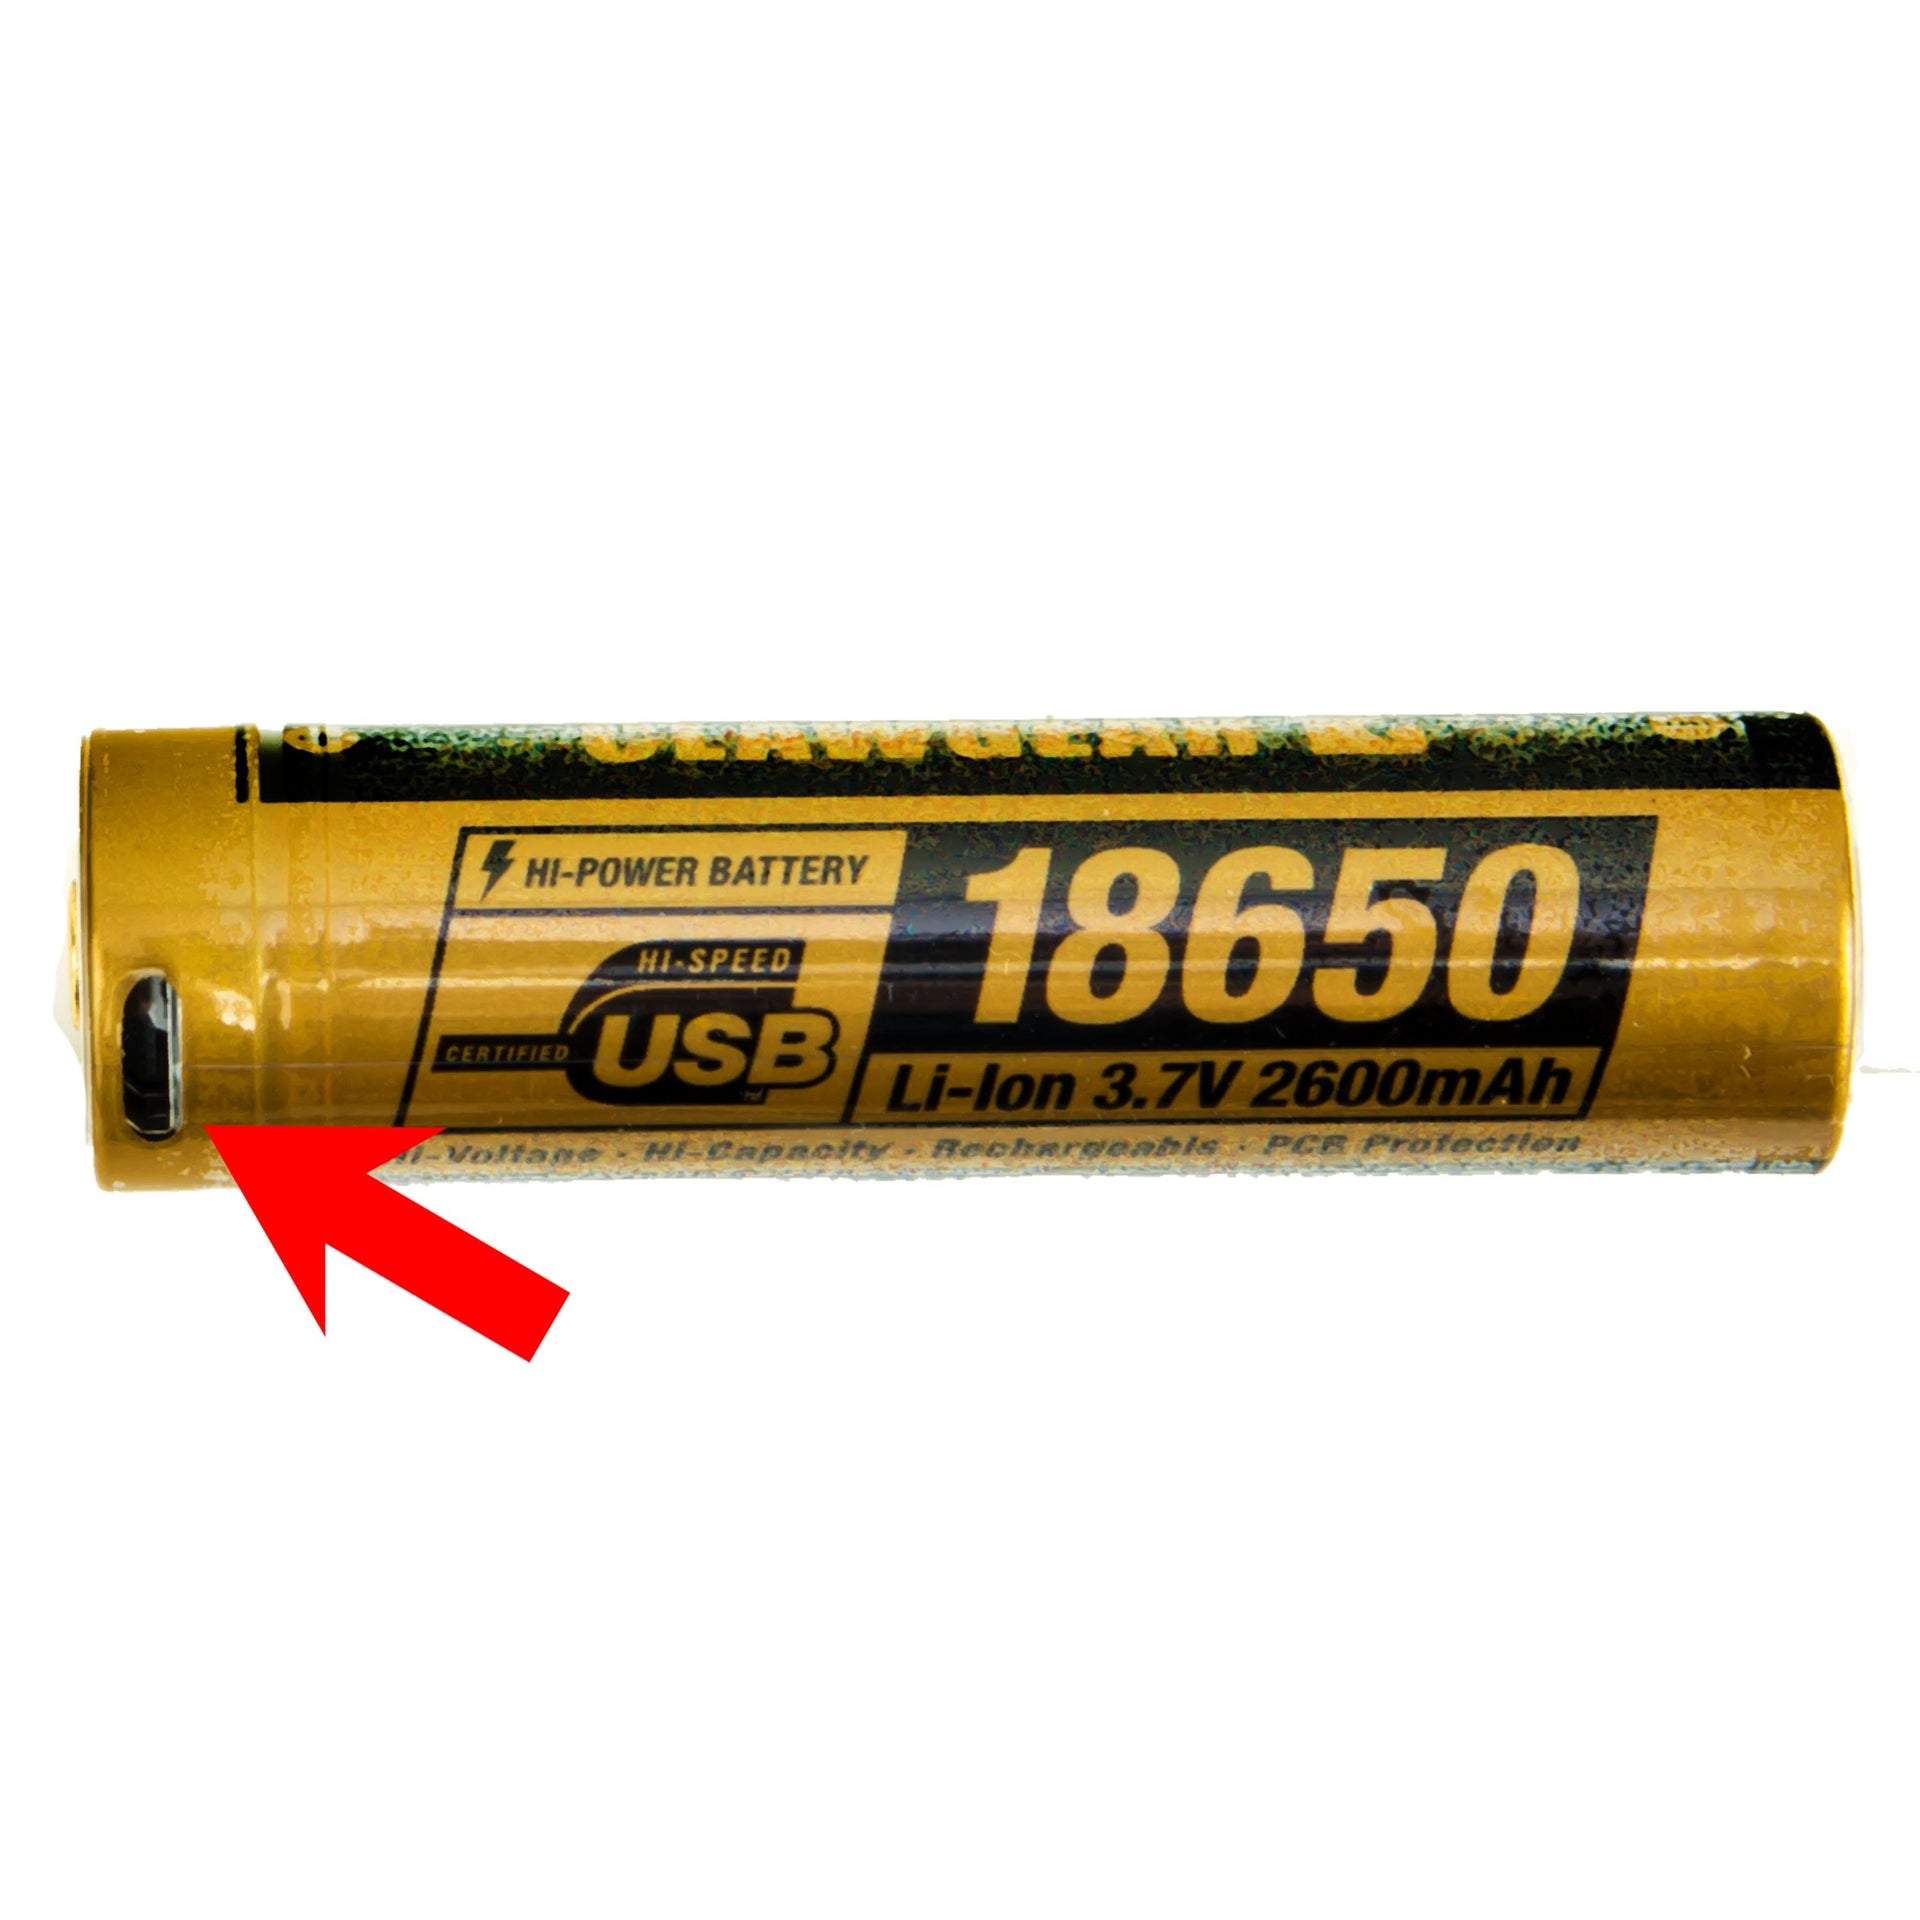 Rechargeable Battery 18650 3.7V 2600mAh Micro-USB